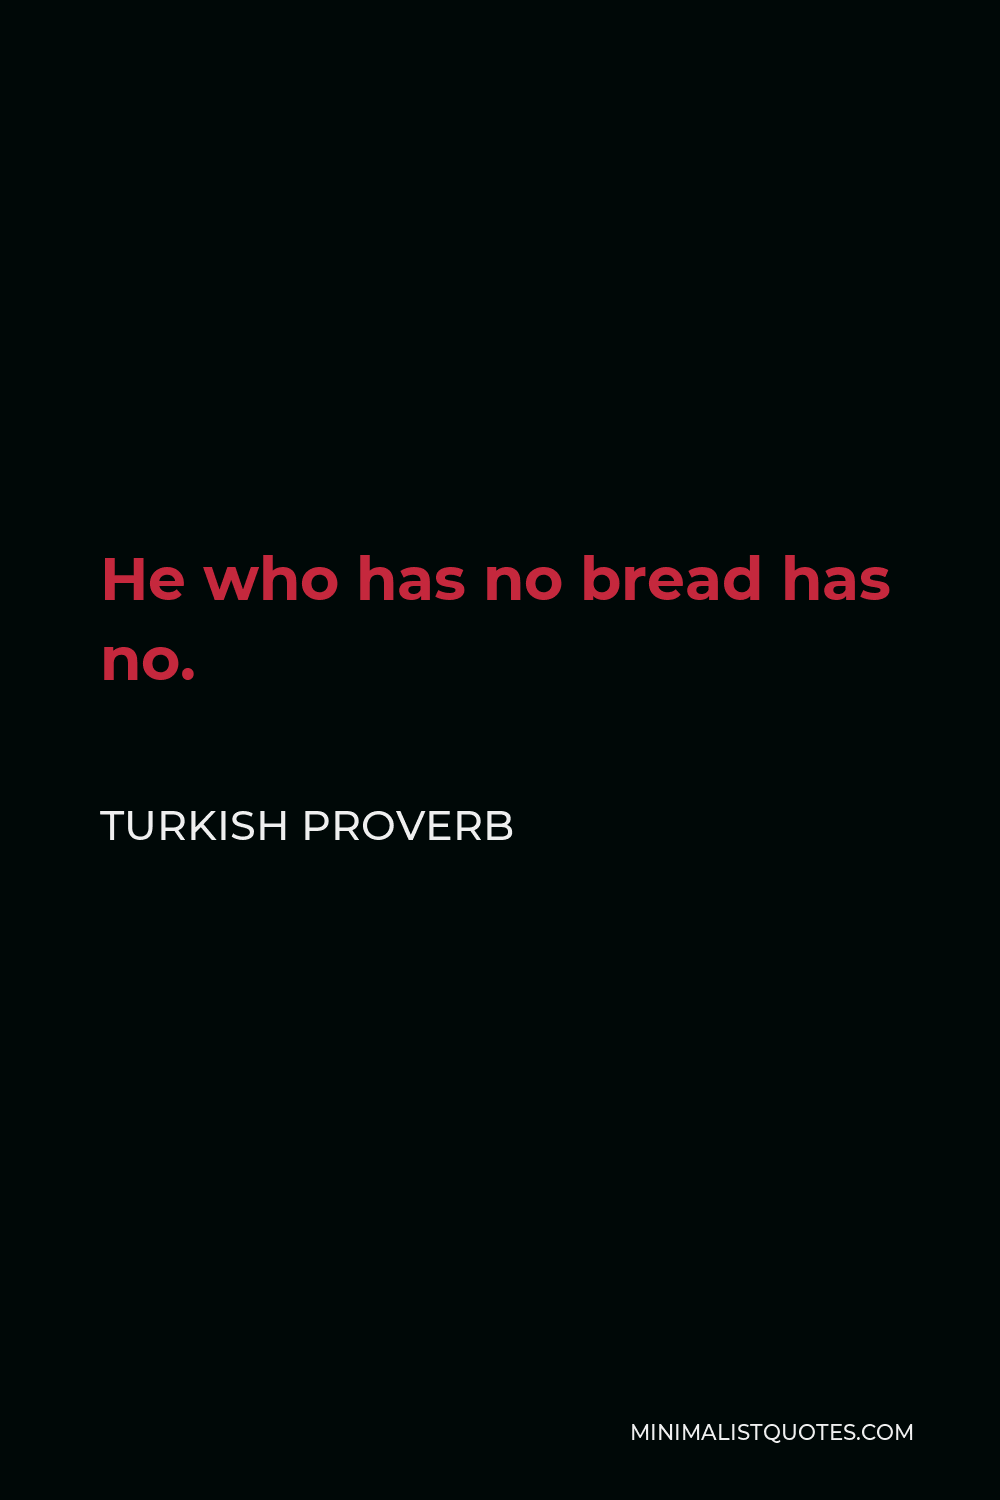 Turkish Proverb Quote - He who has no bread has no.